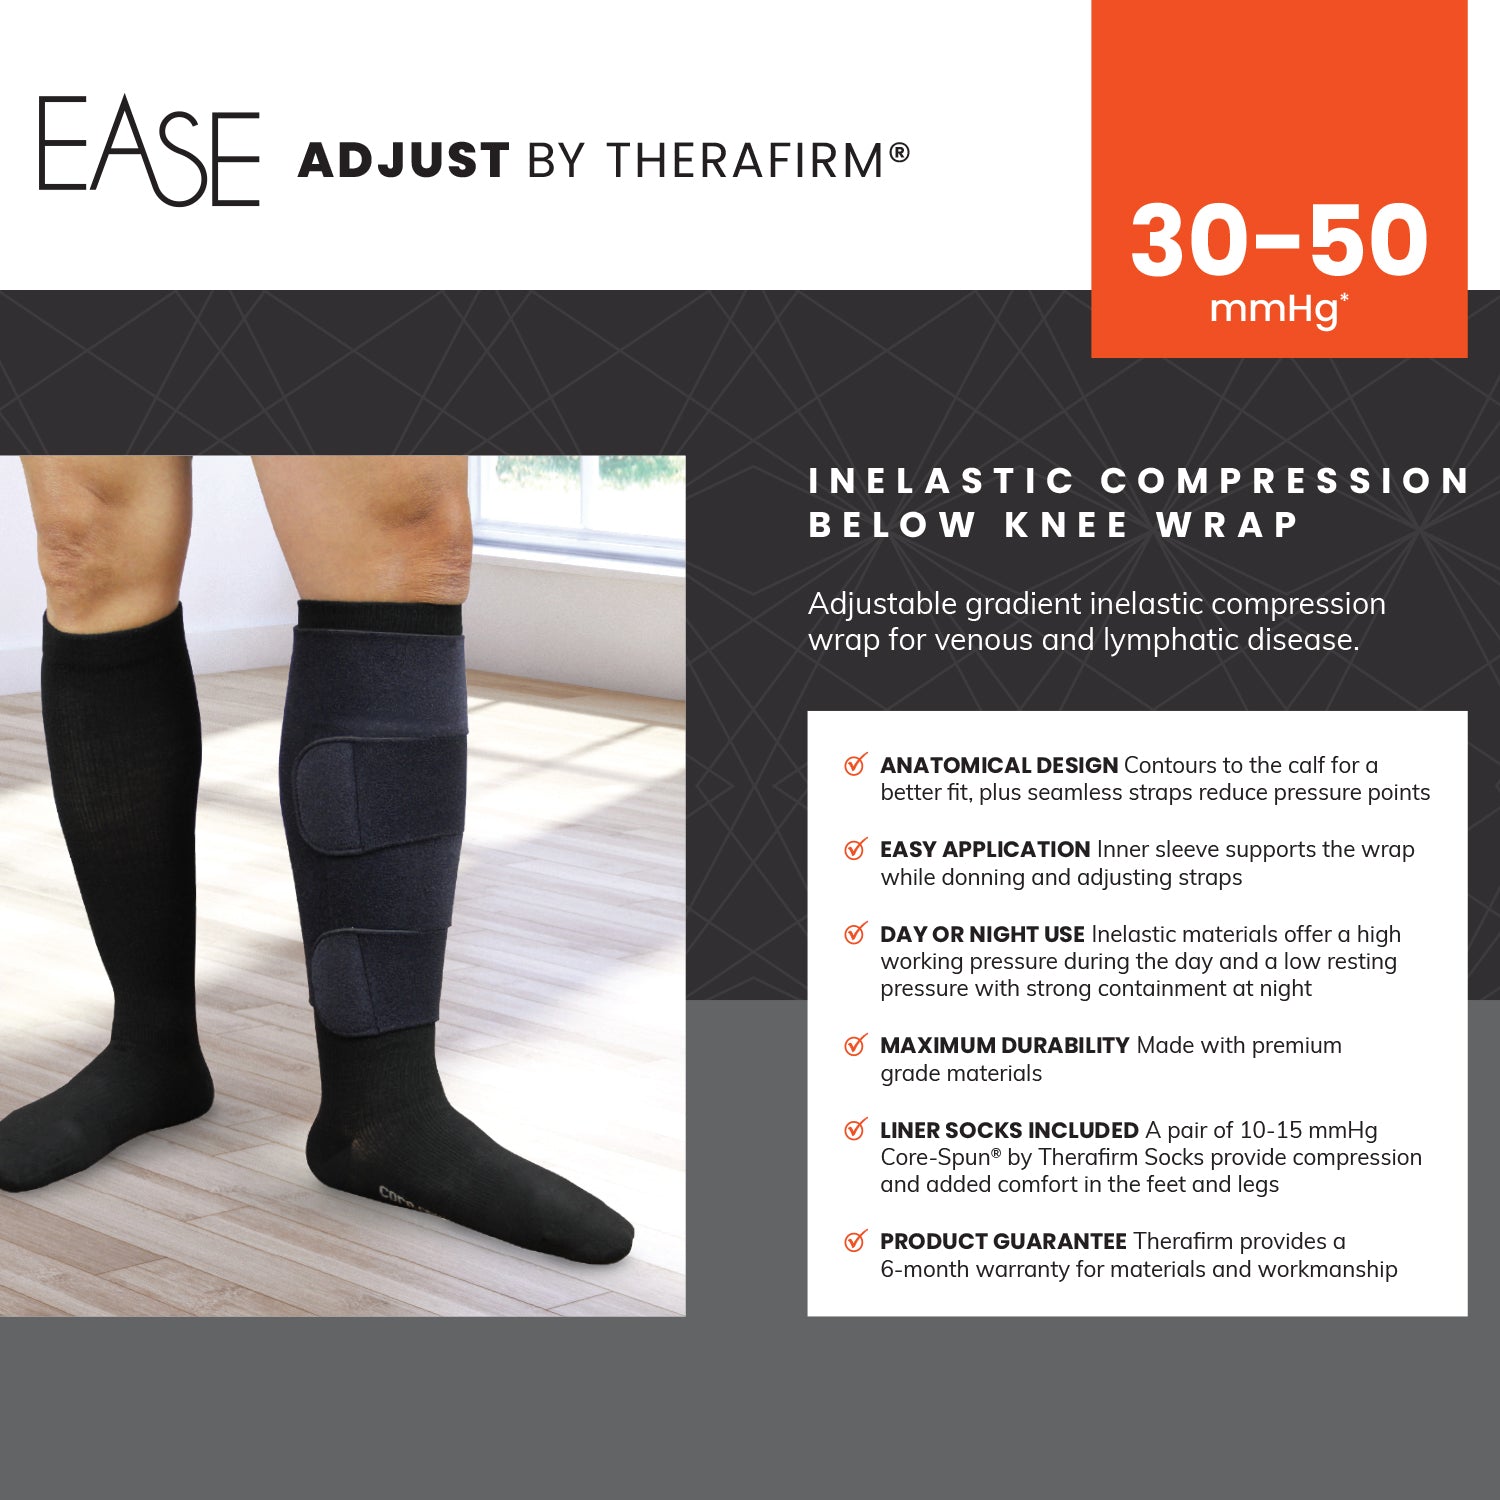 Therafirm Ease Adjust Inelastic Compression Below Knee Wrap – Ames Walker